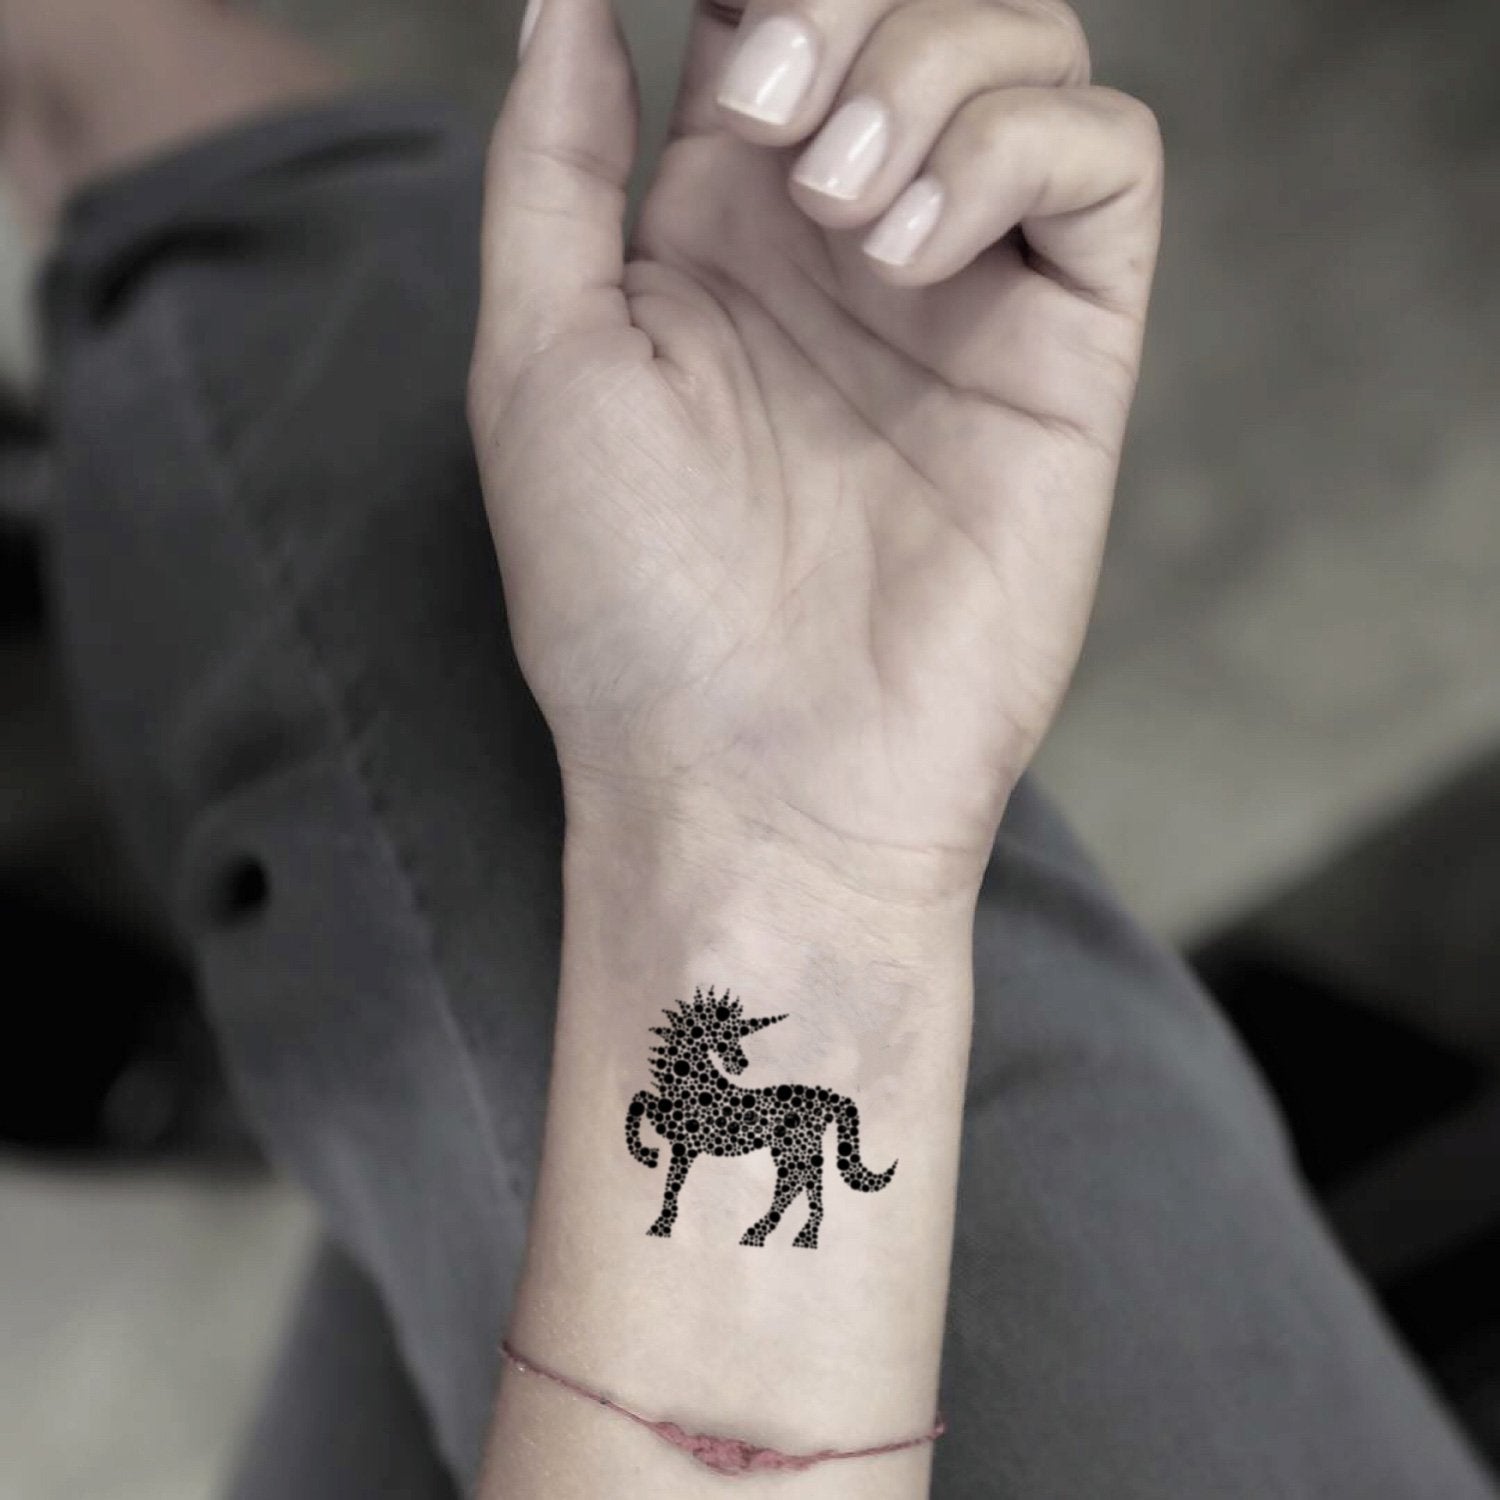 fake small dotted unicorn animal temporary tattoo sticker design idea on wrist